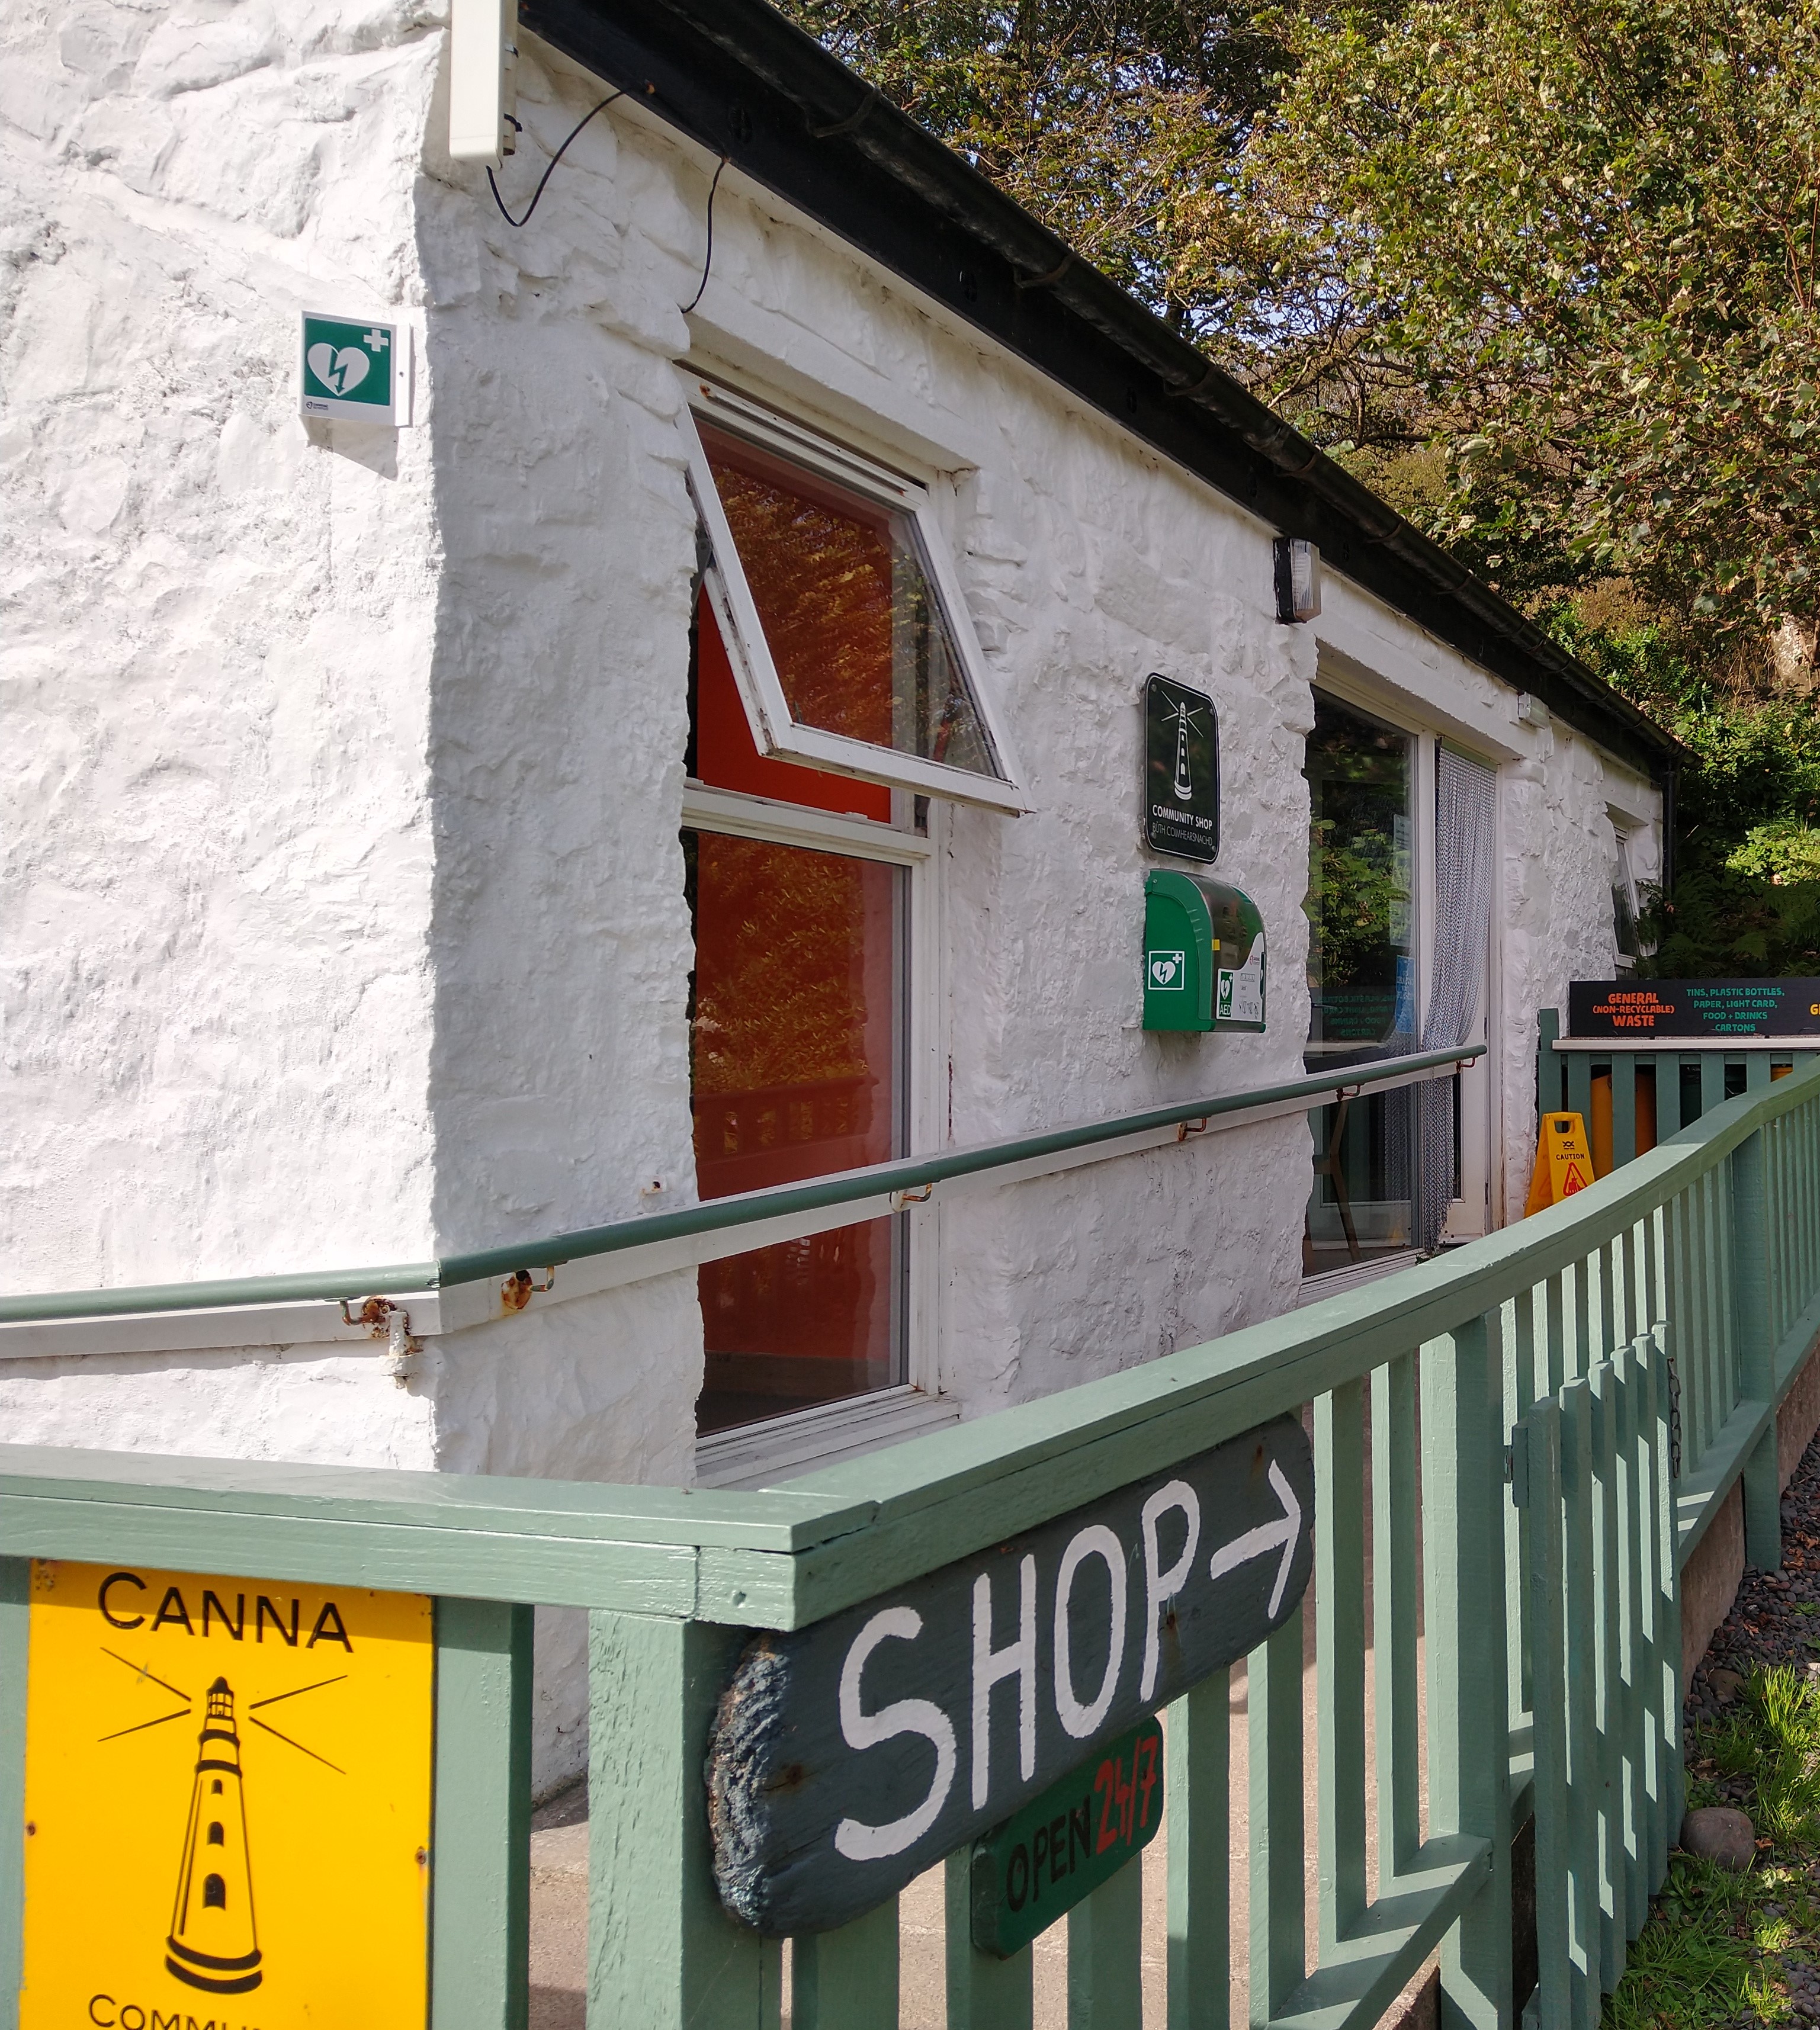 Canna Community Shop